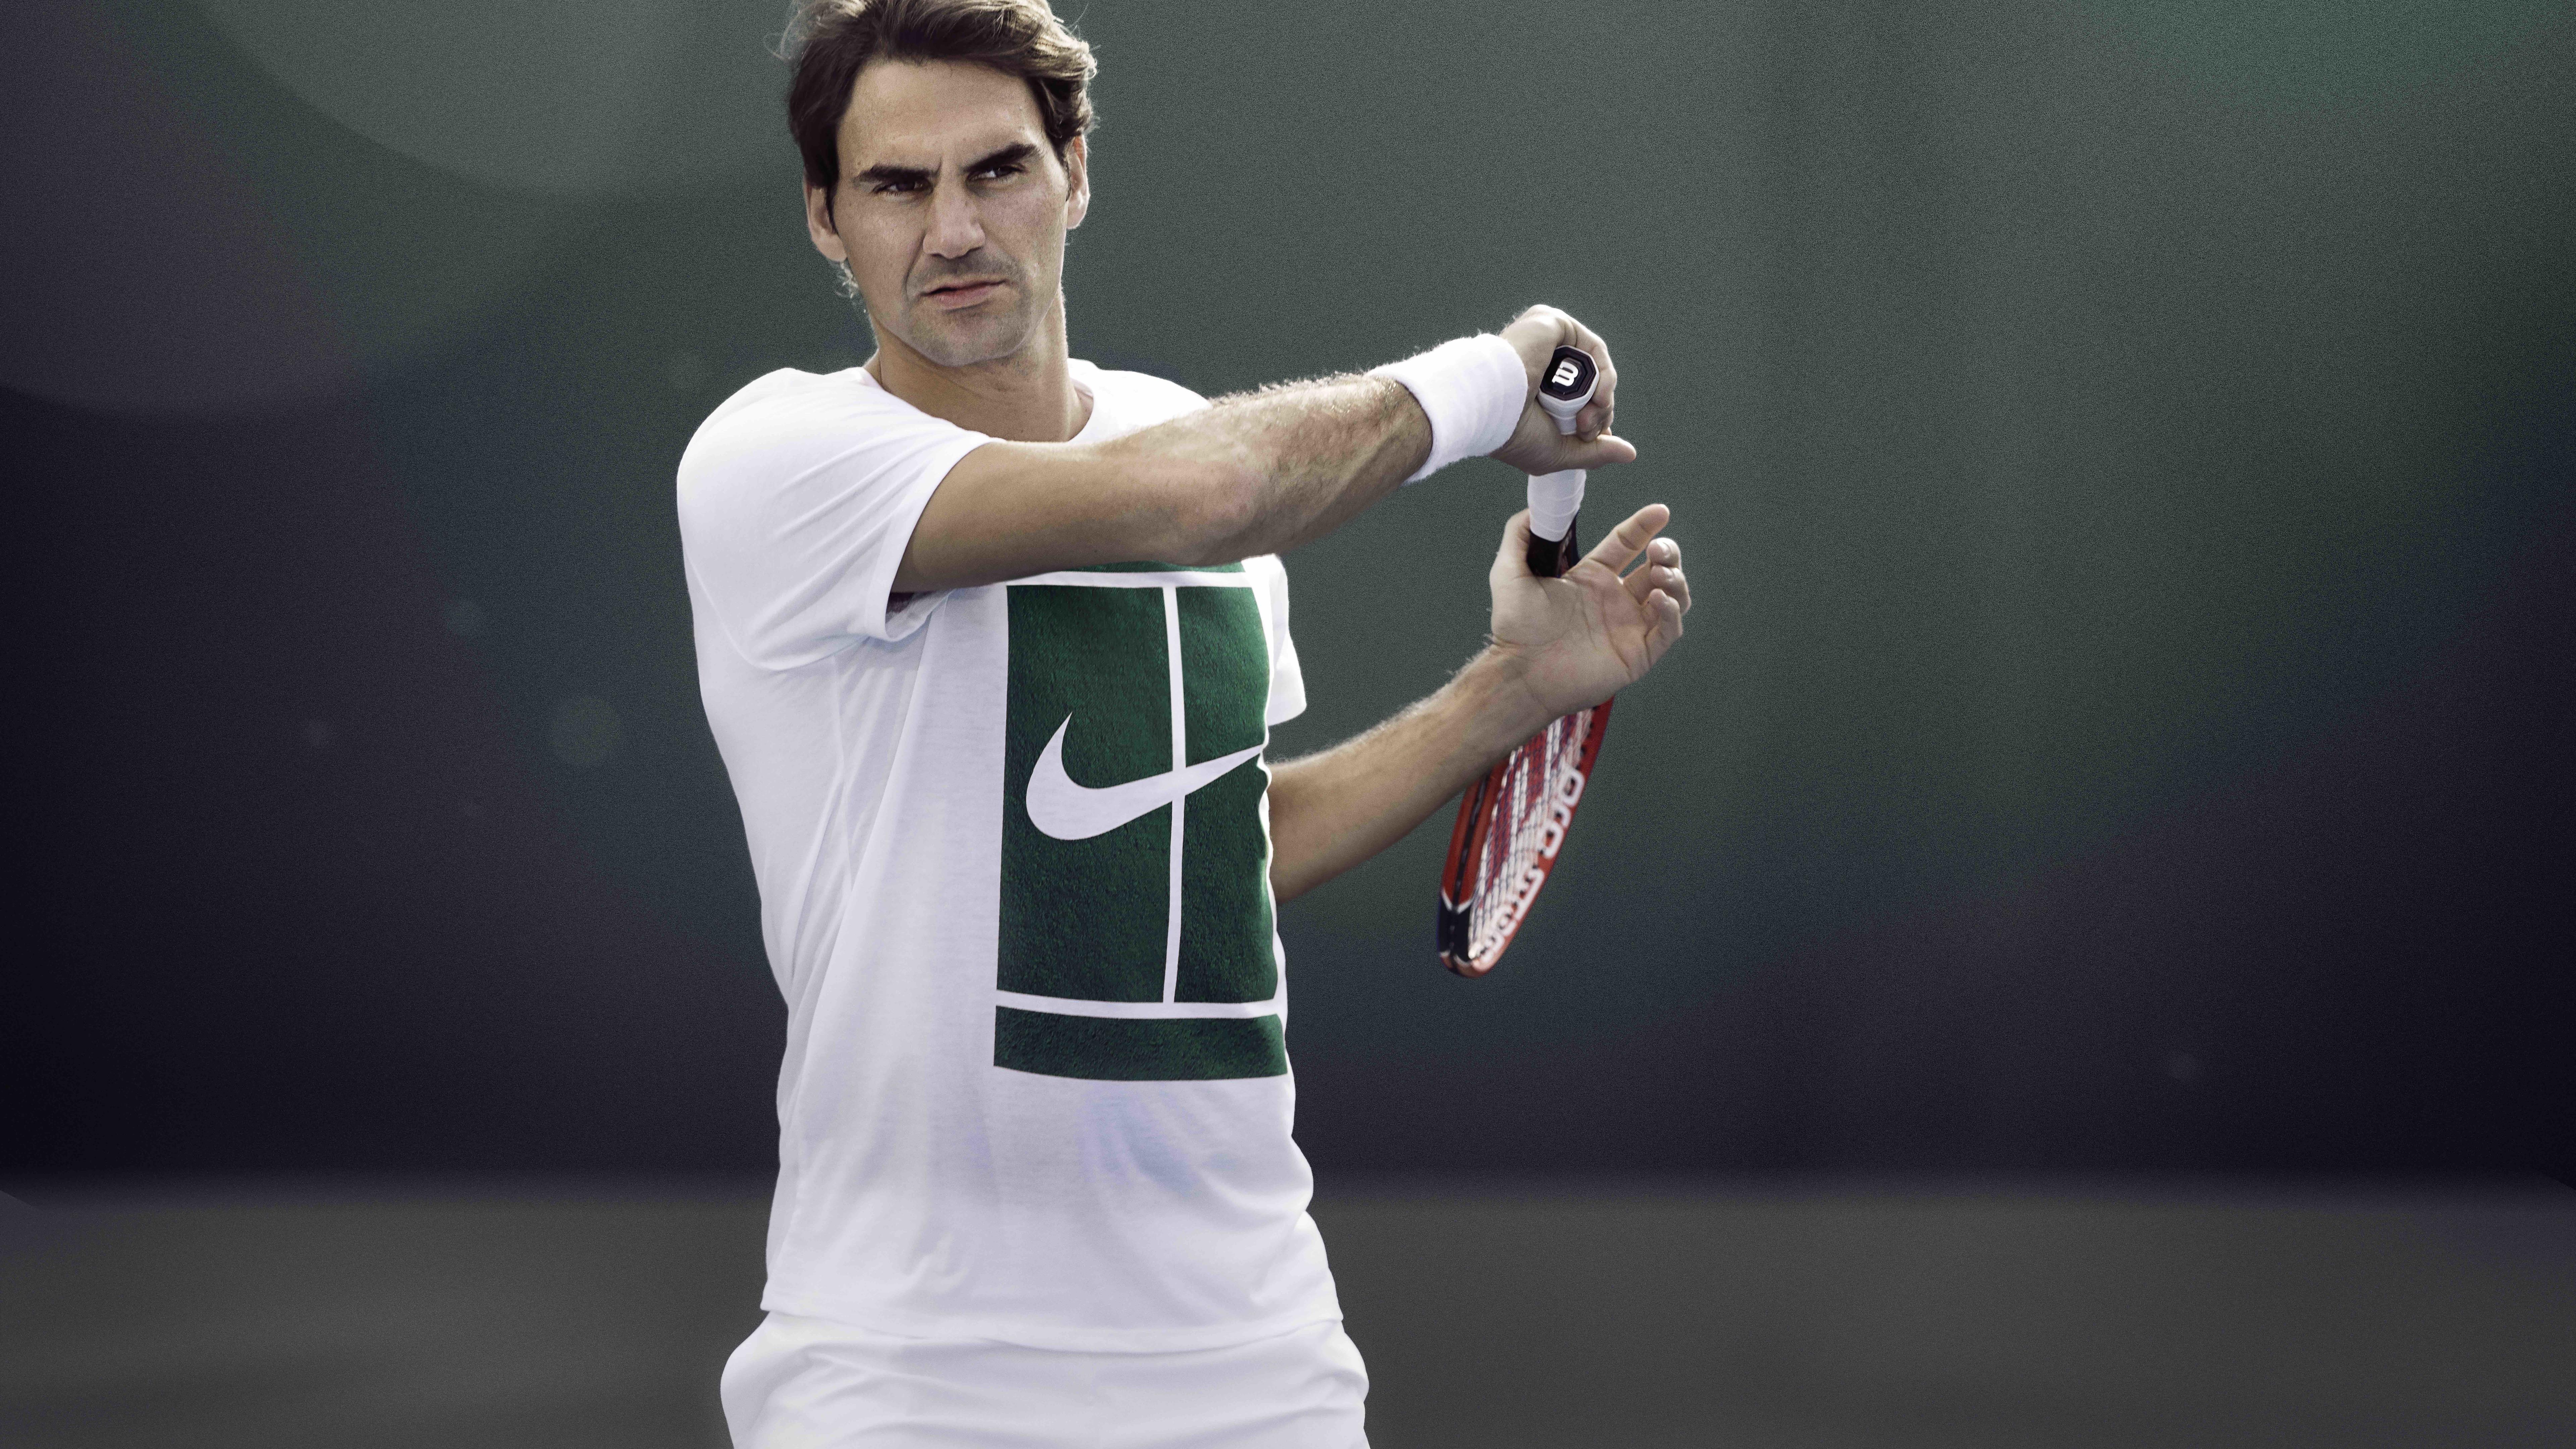 Roger Federer Tennis Player 8k HD 4k Wallpaper, Image